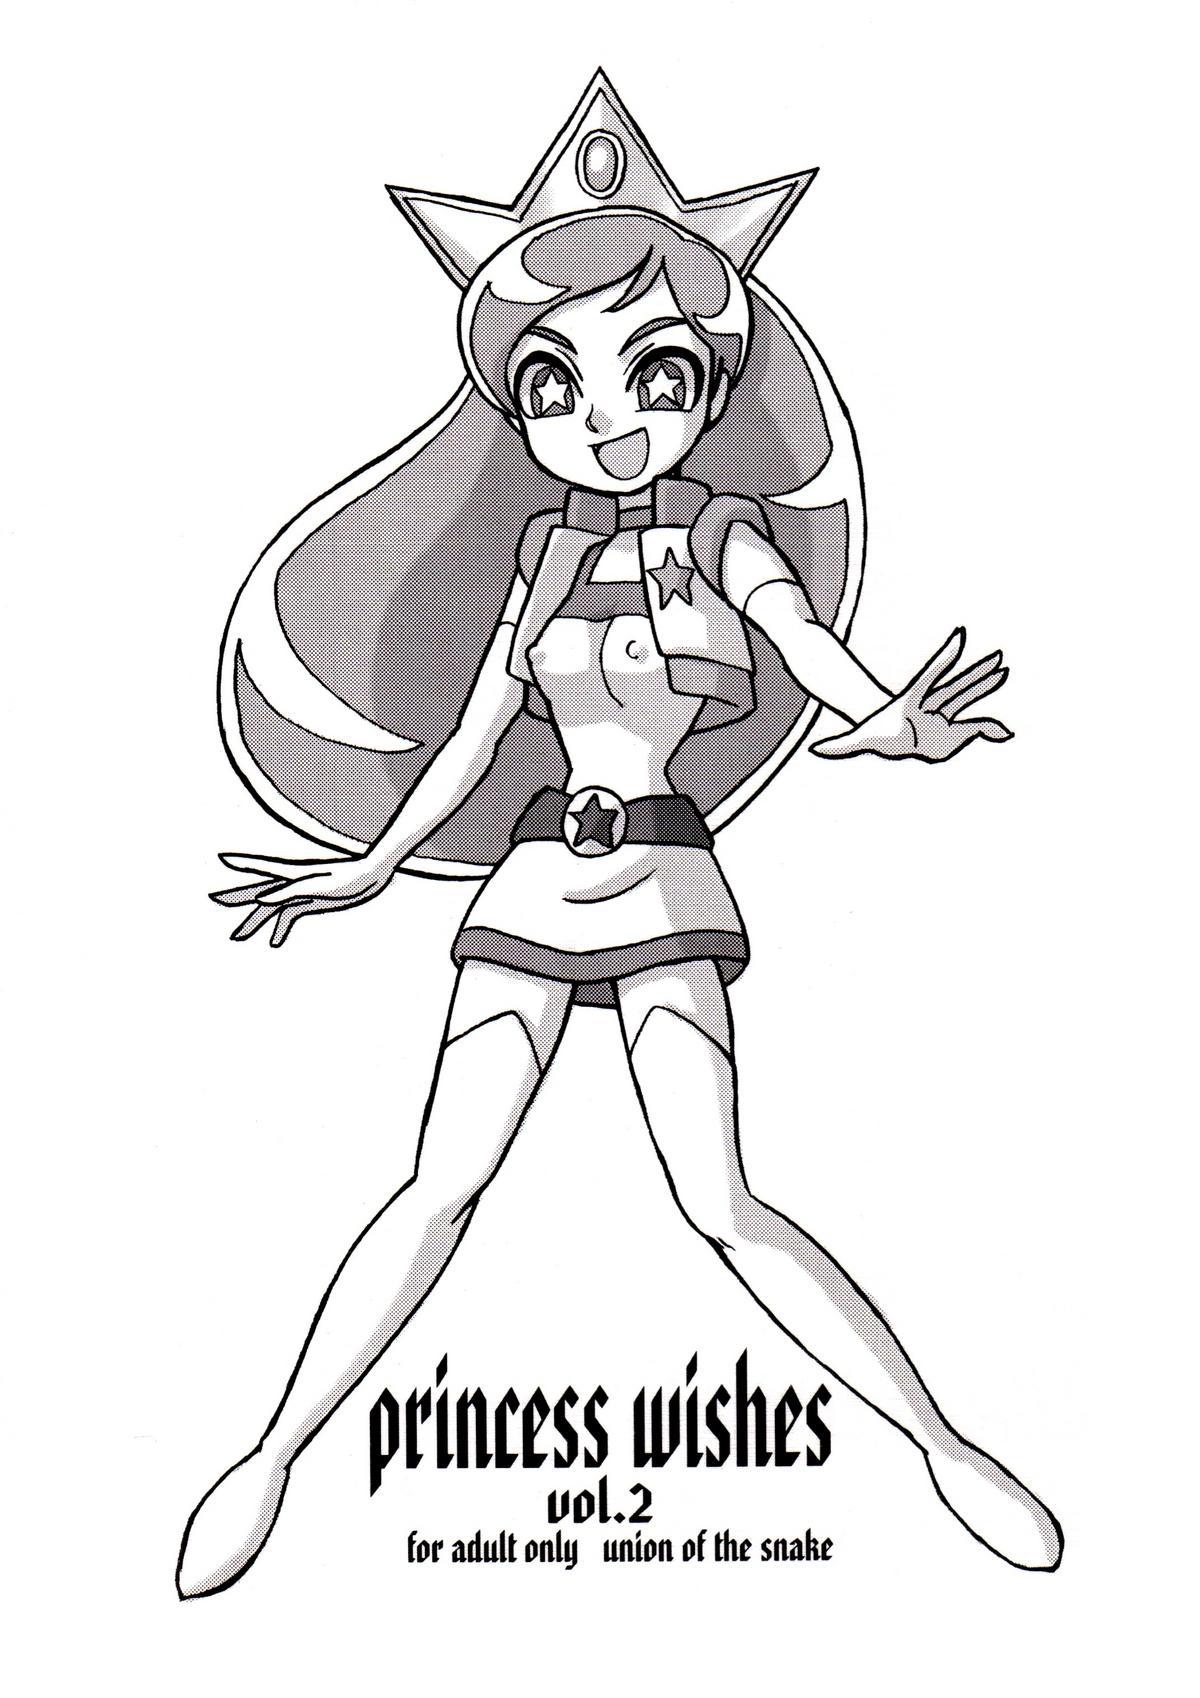 Bathroom princess wishes vol. 2 - Powerpuff girls z Tats - Page 1